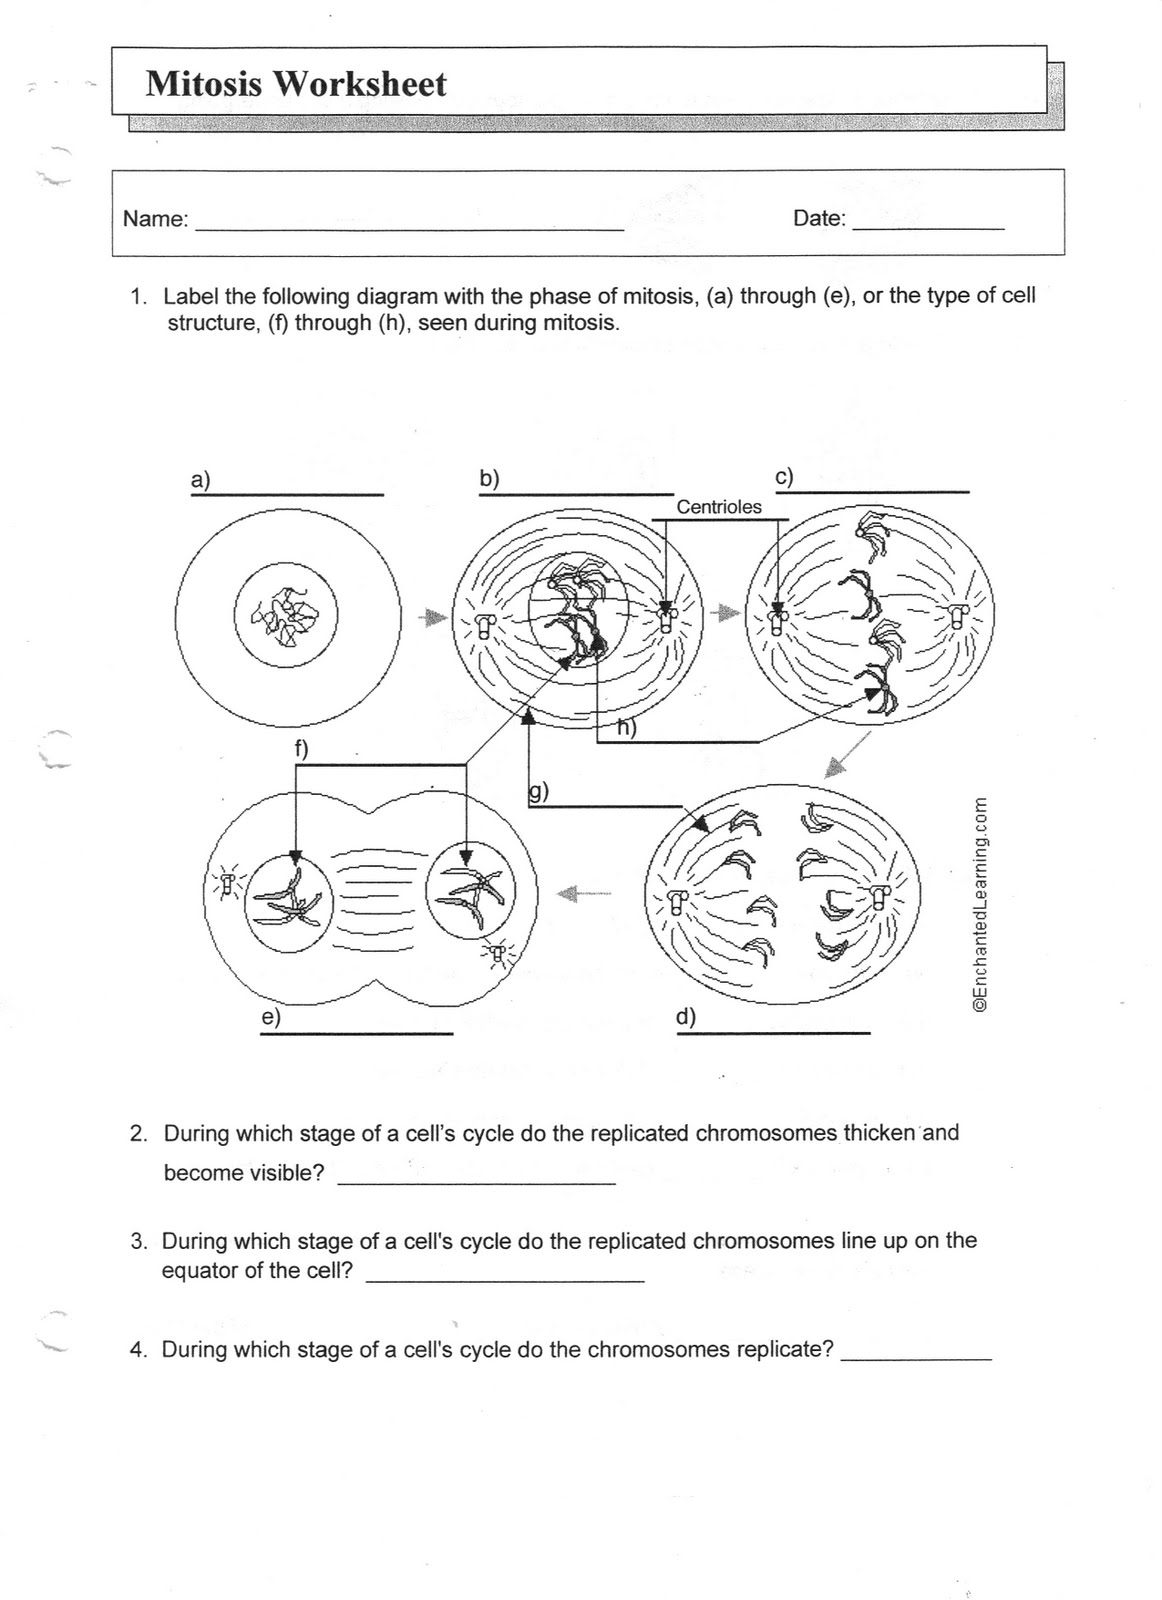 meiosis-worksheet-answer-key-biology